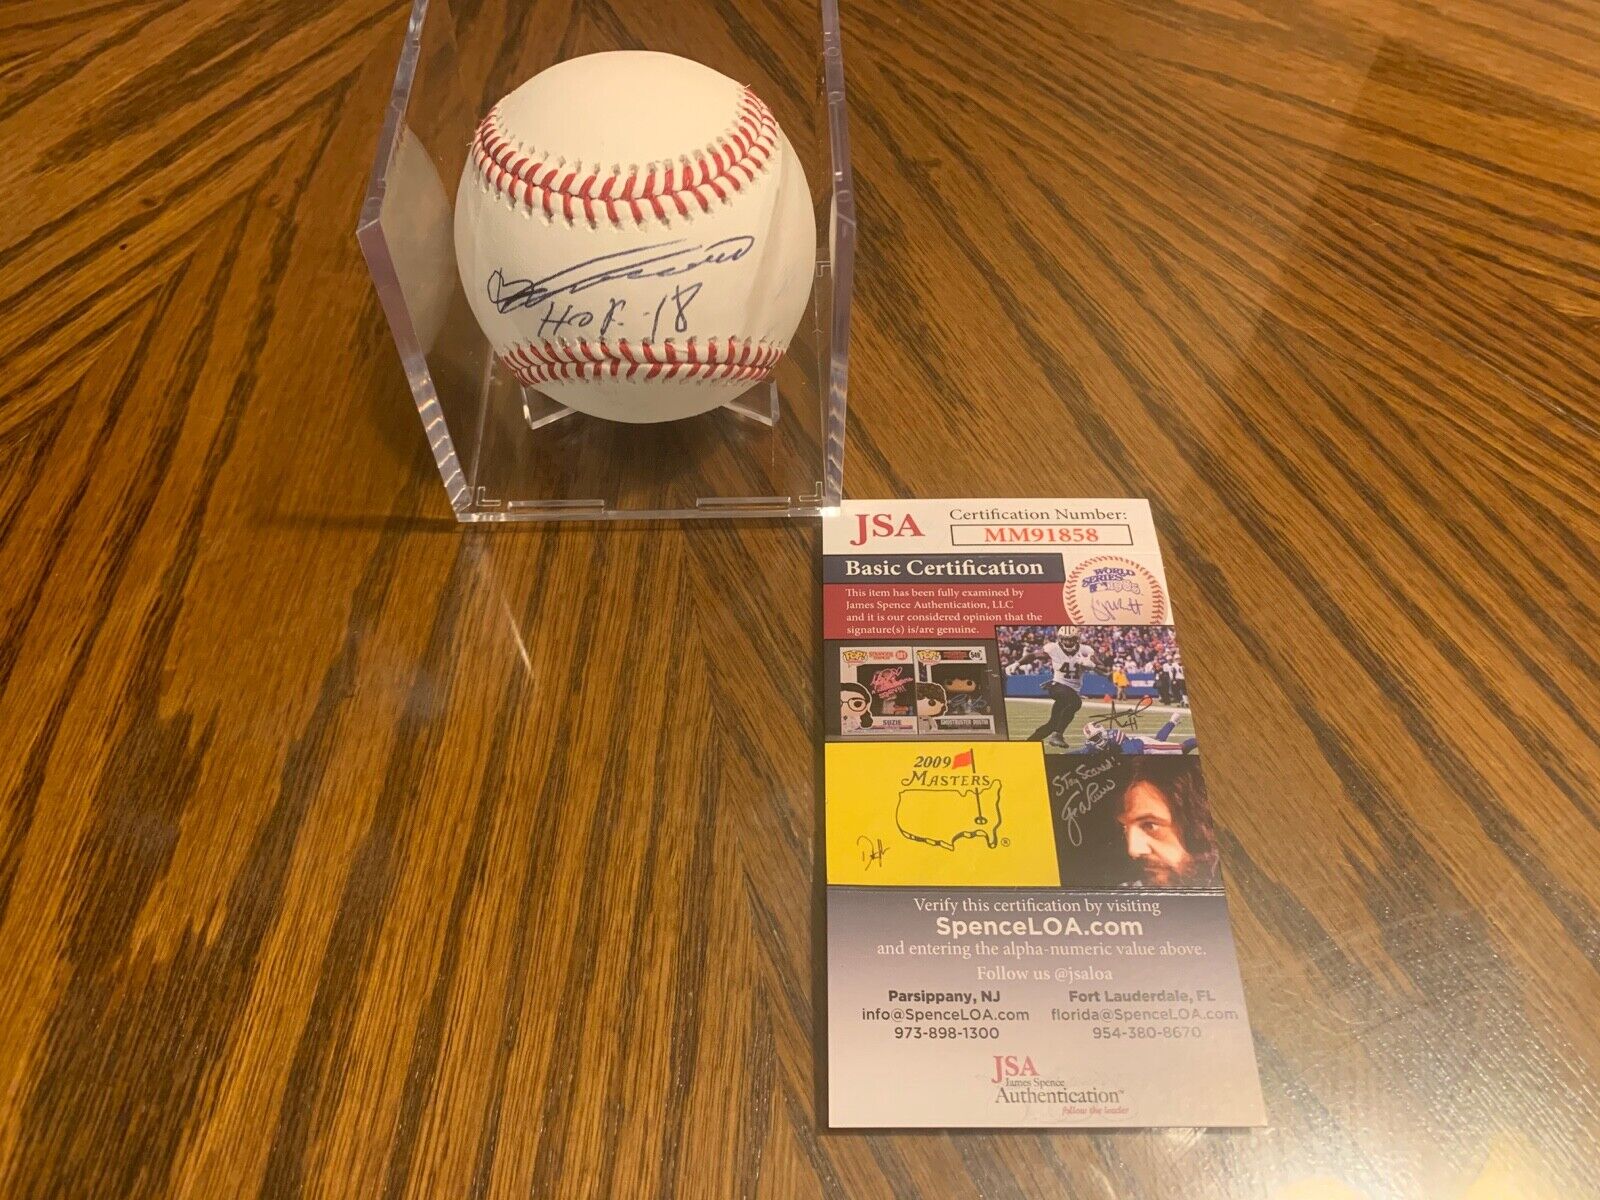 Vladimir Guerrero Senior Autographed Baseball HOF18 W/ JSA COA MM91858